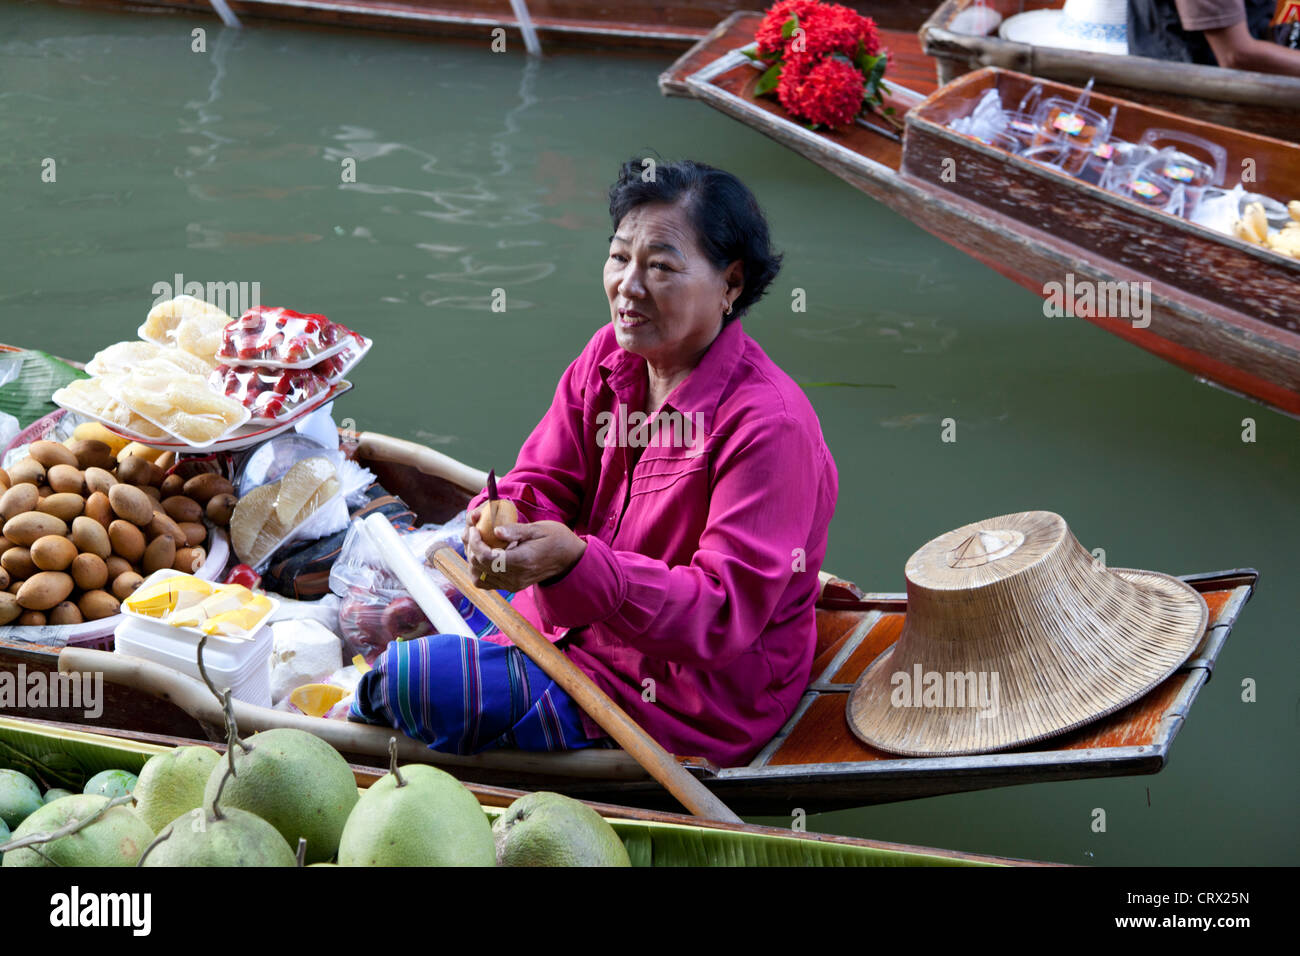 The Damnoen Saduak floating market, a major tourist destination in Thailand. Le marché flottant de Damnoen Saduak en Thaïlande. Stock Photo